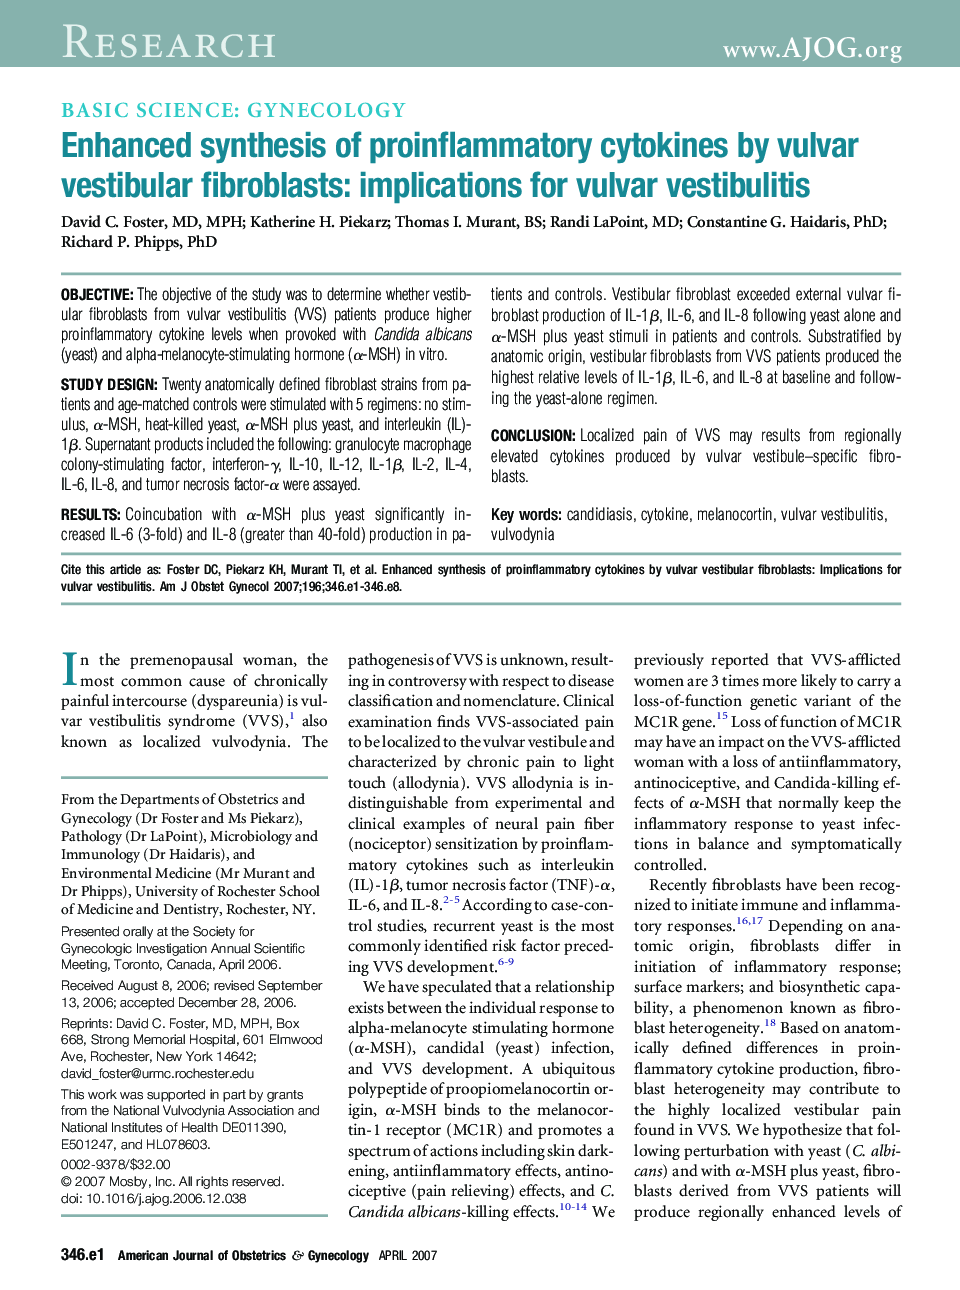 Enhanced synthesis of proinflammatory cytokines by vulvar vestibular fibroblasts: implications for vulvar vestibulitis